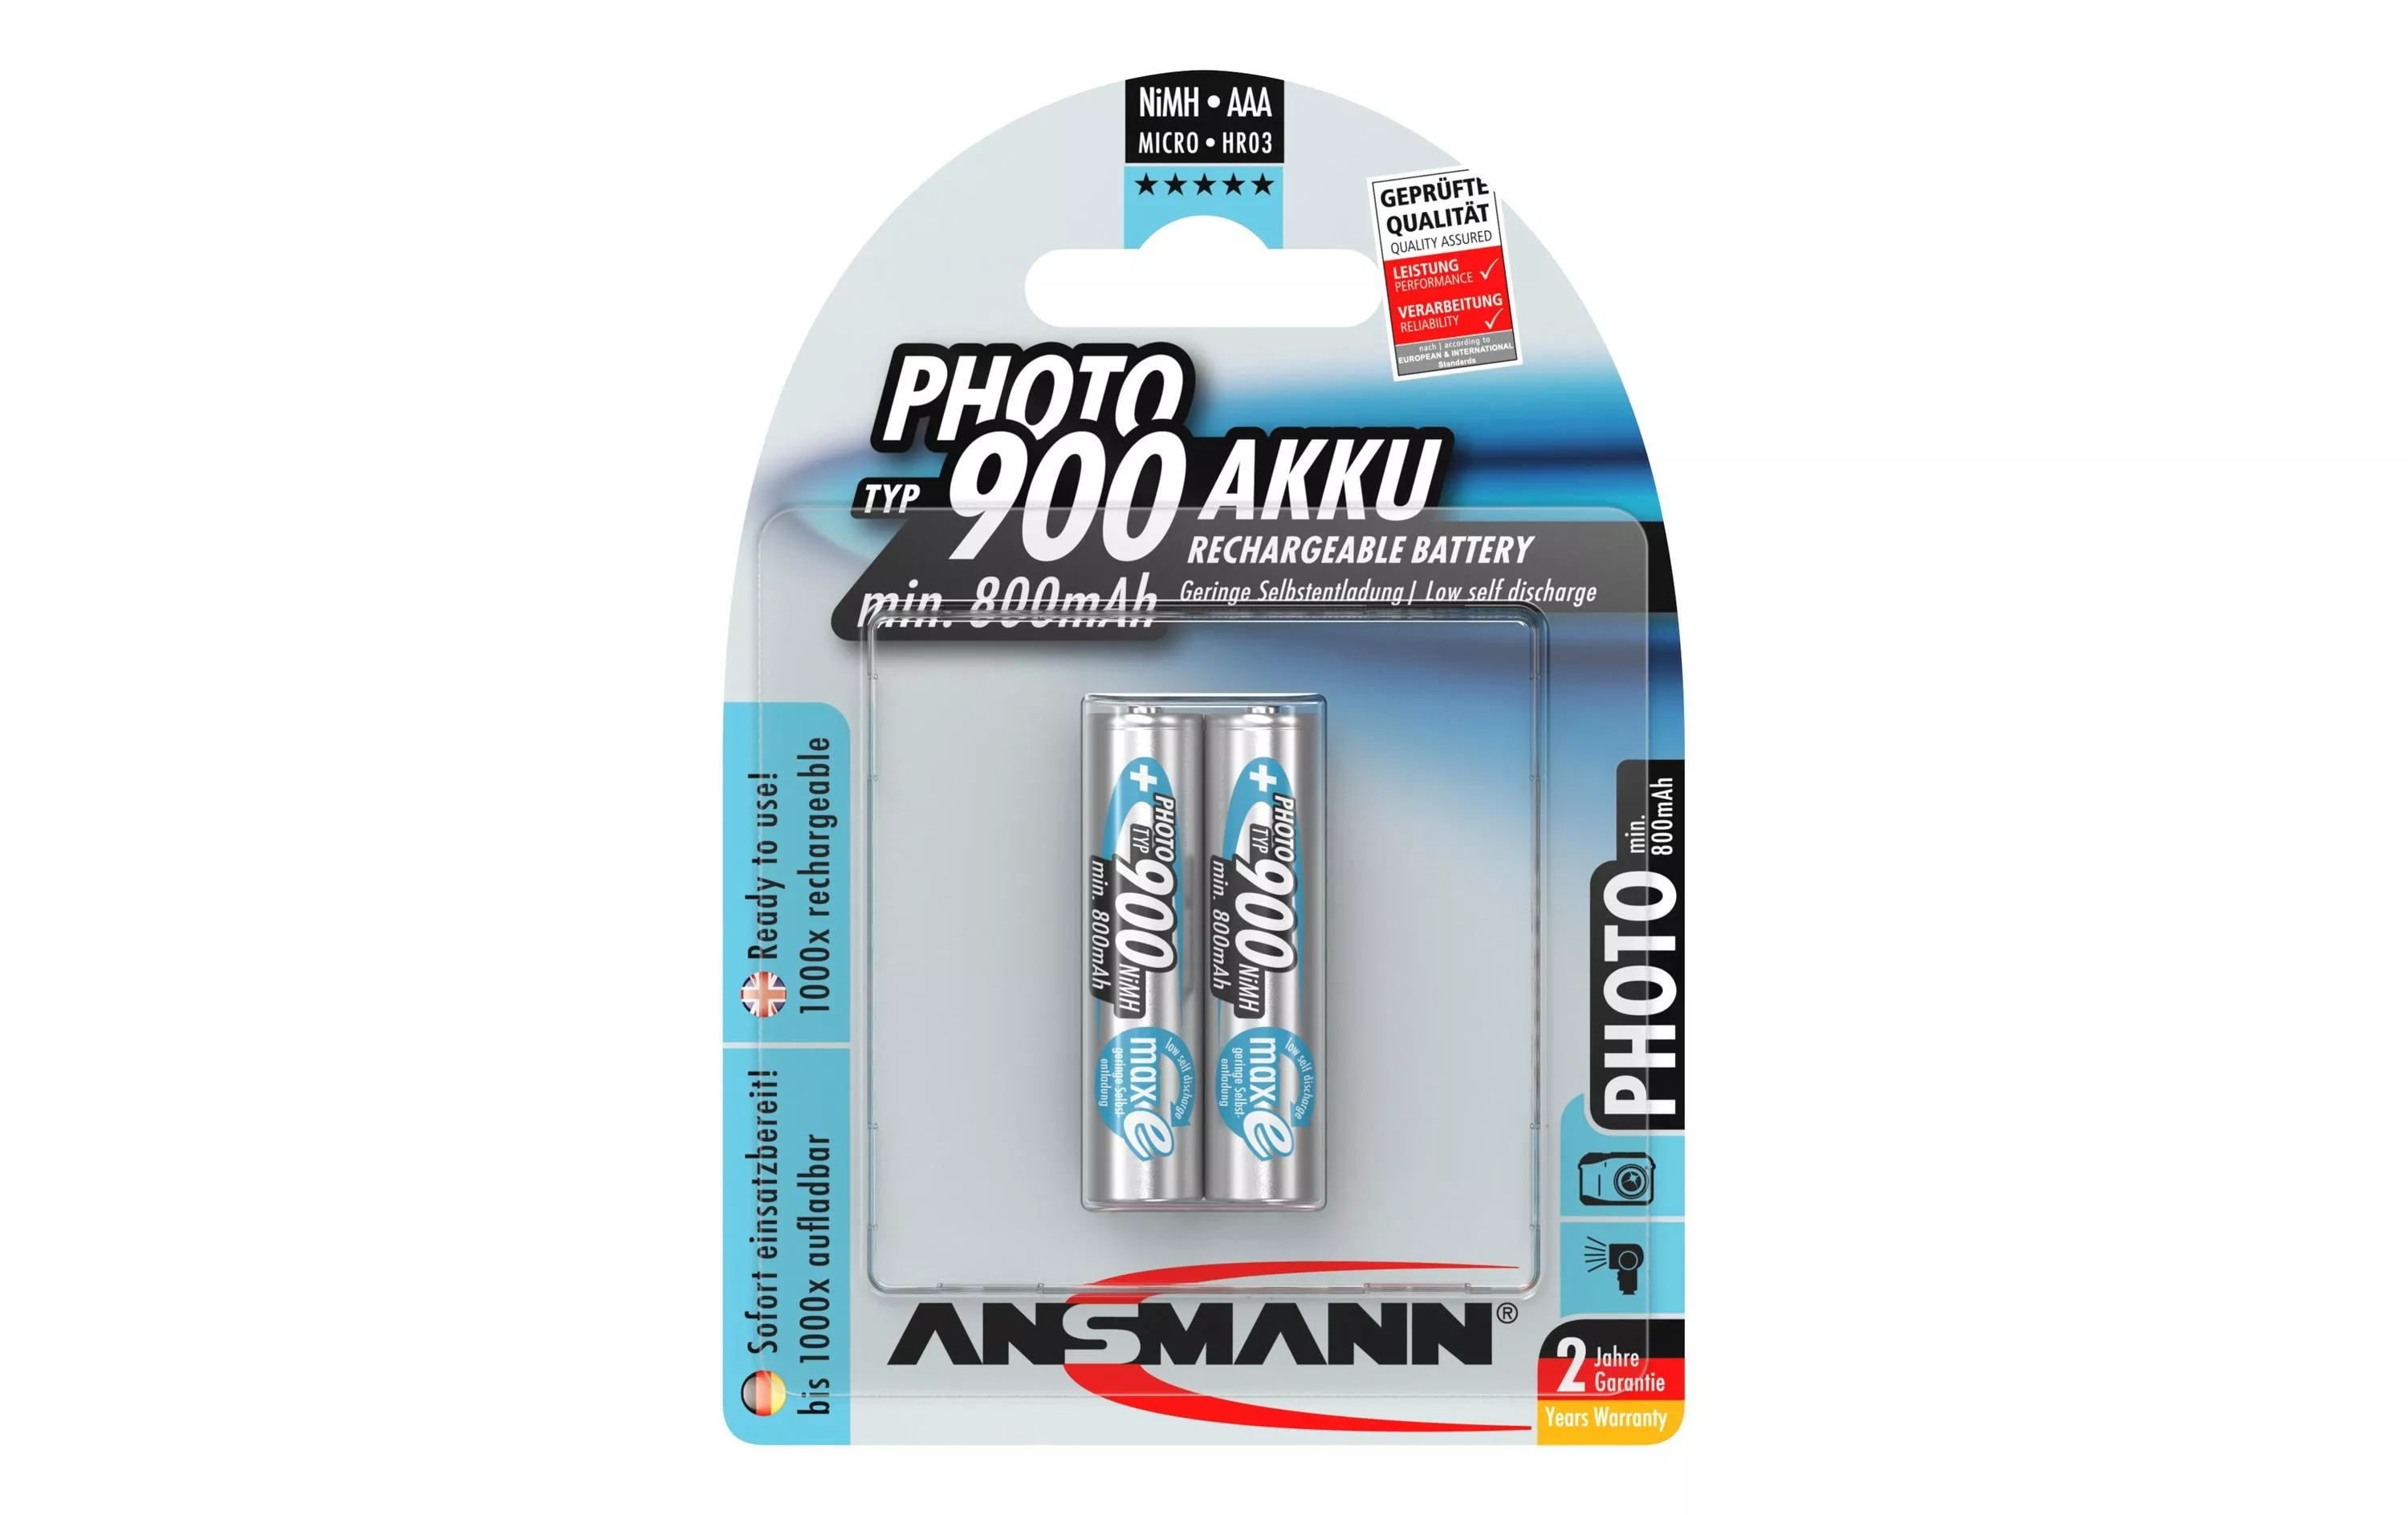 Batteria ricaricabile Ansmann 2x AAA tipo 900 800 mAh per fotocamere digitali, ecc.